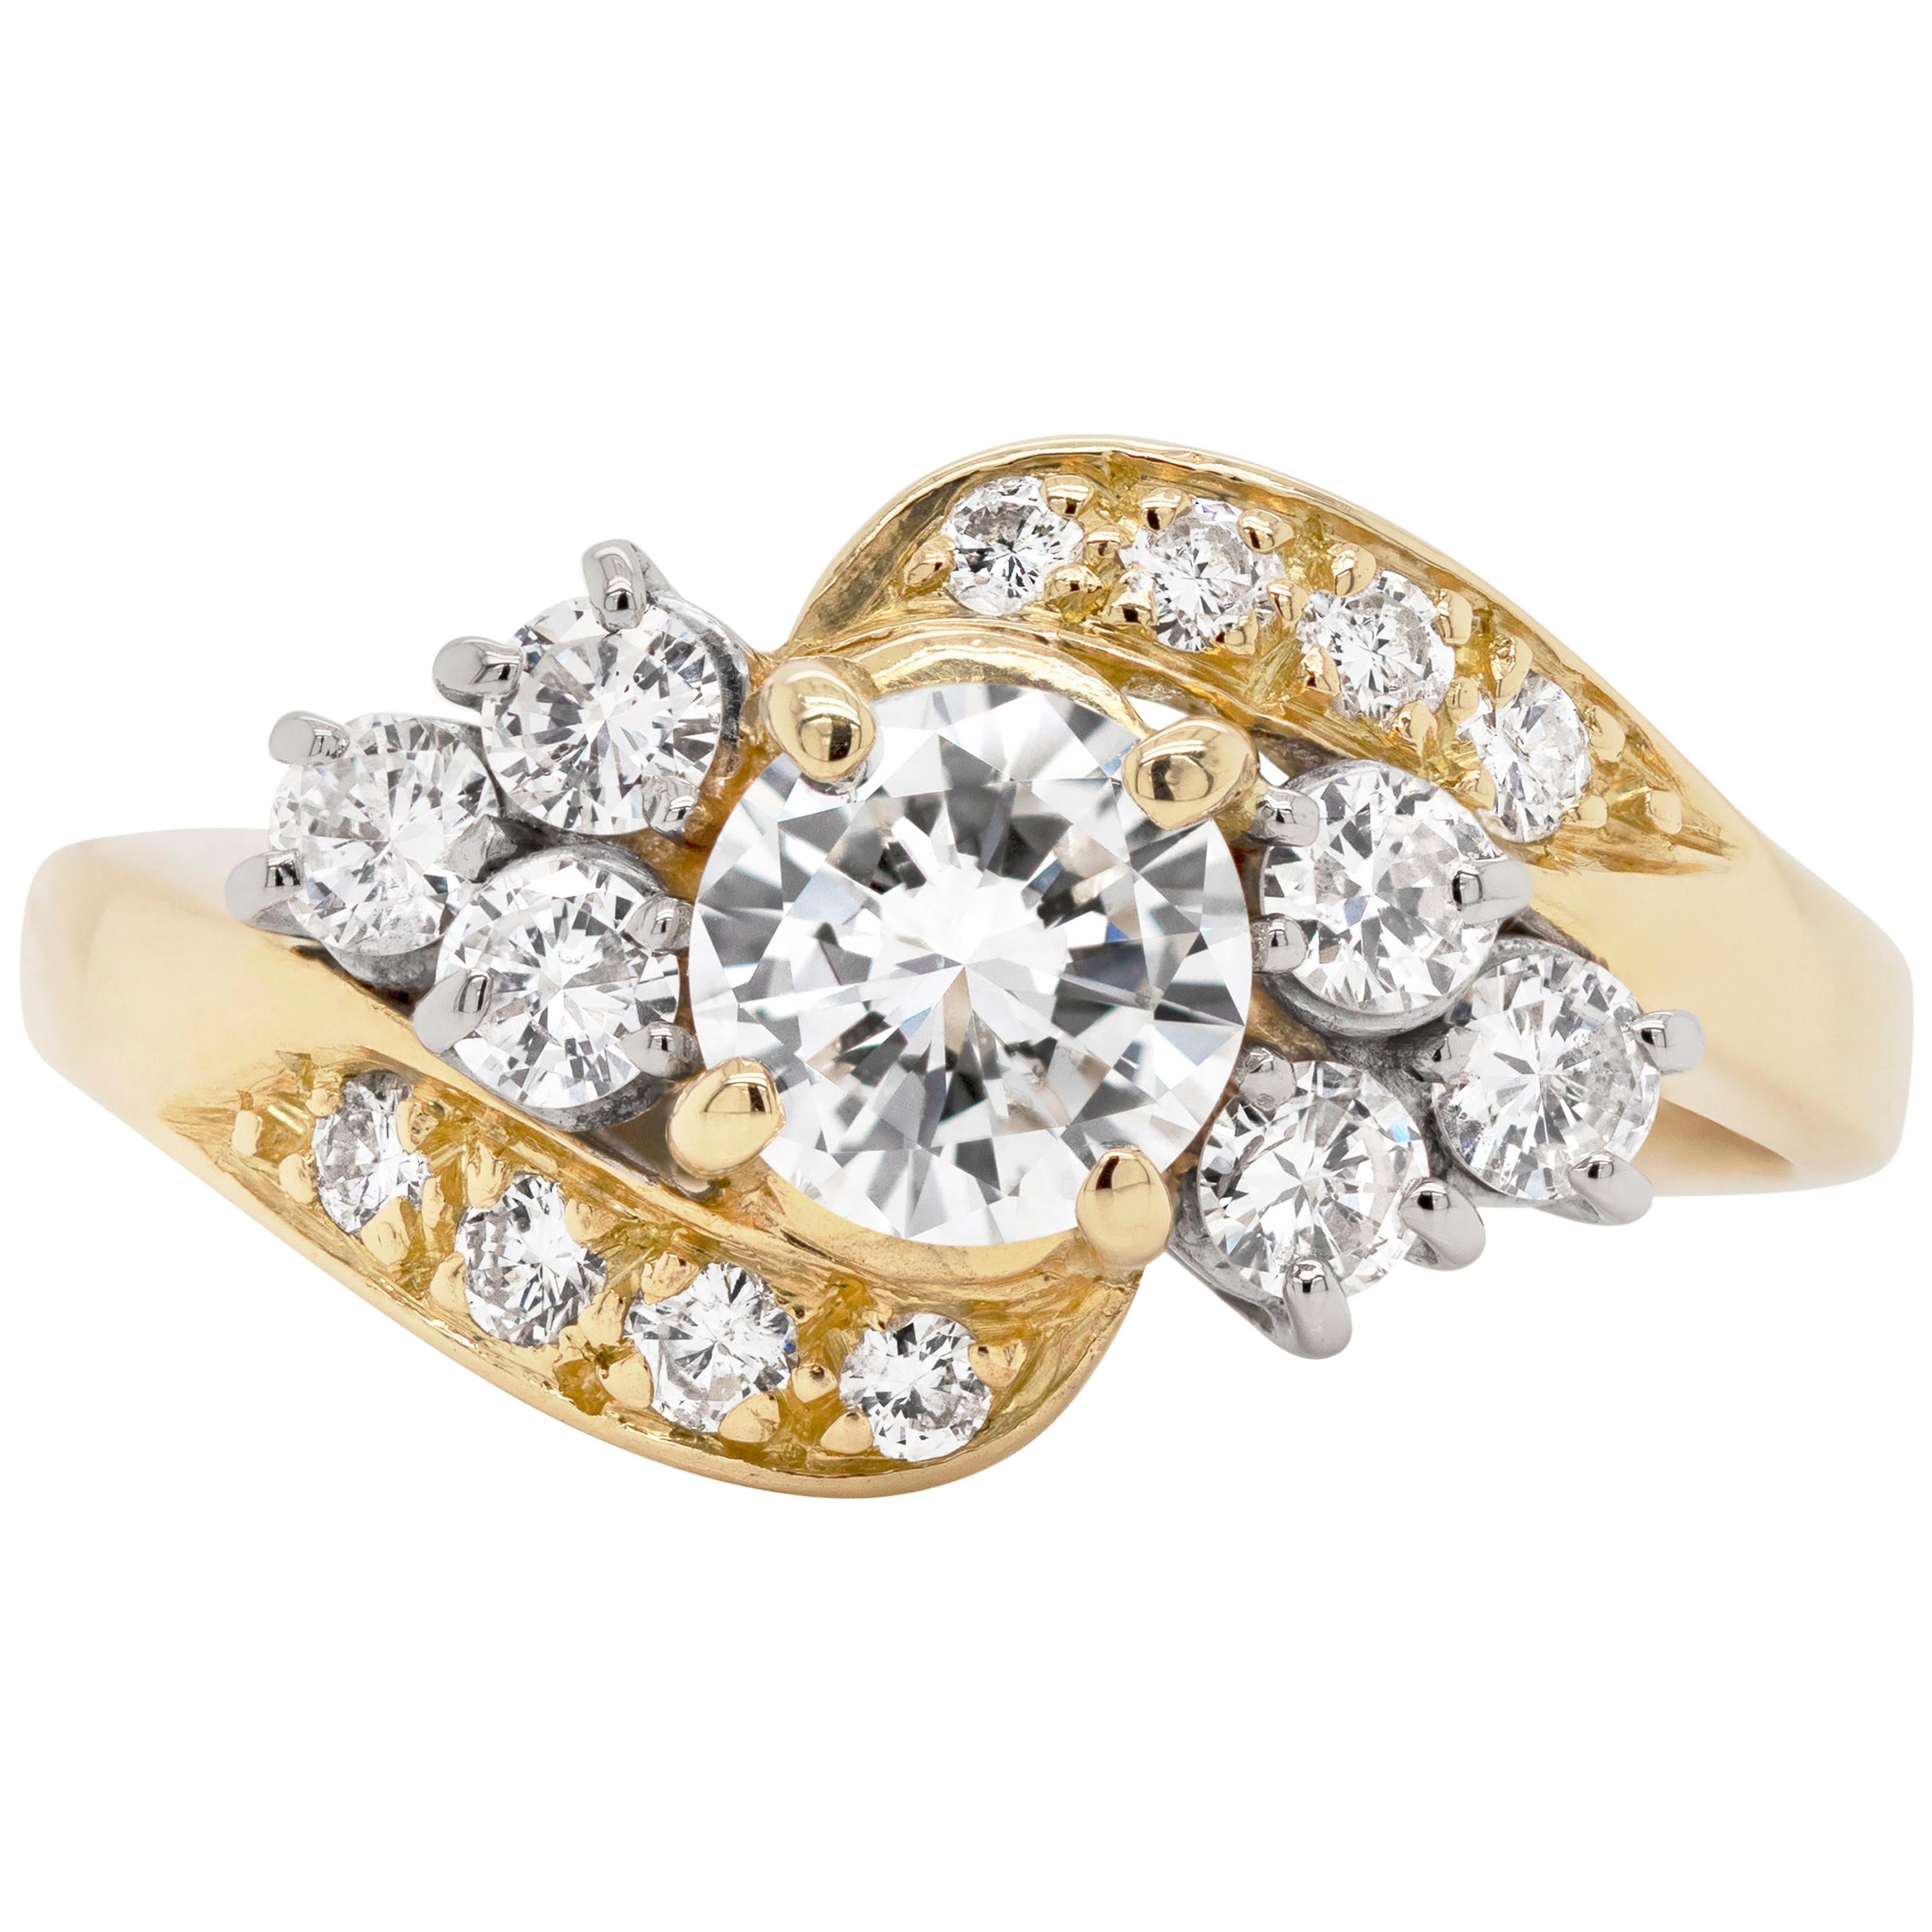 Bague de fiançailles torsadée en or jaune 18 carats avec diamants